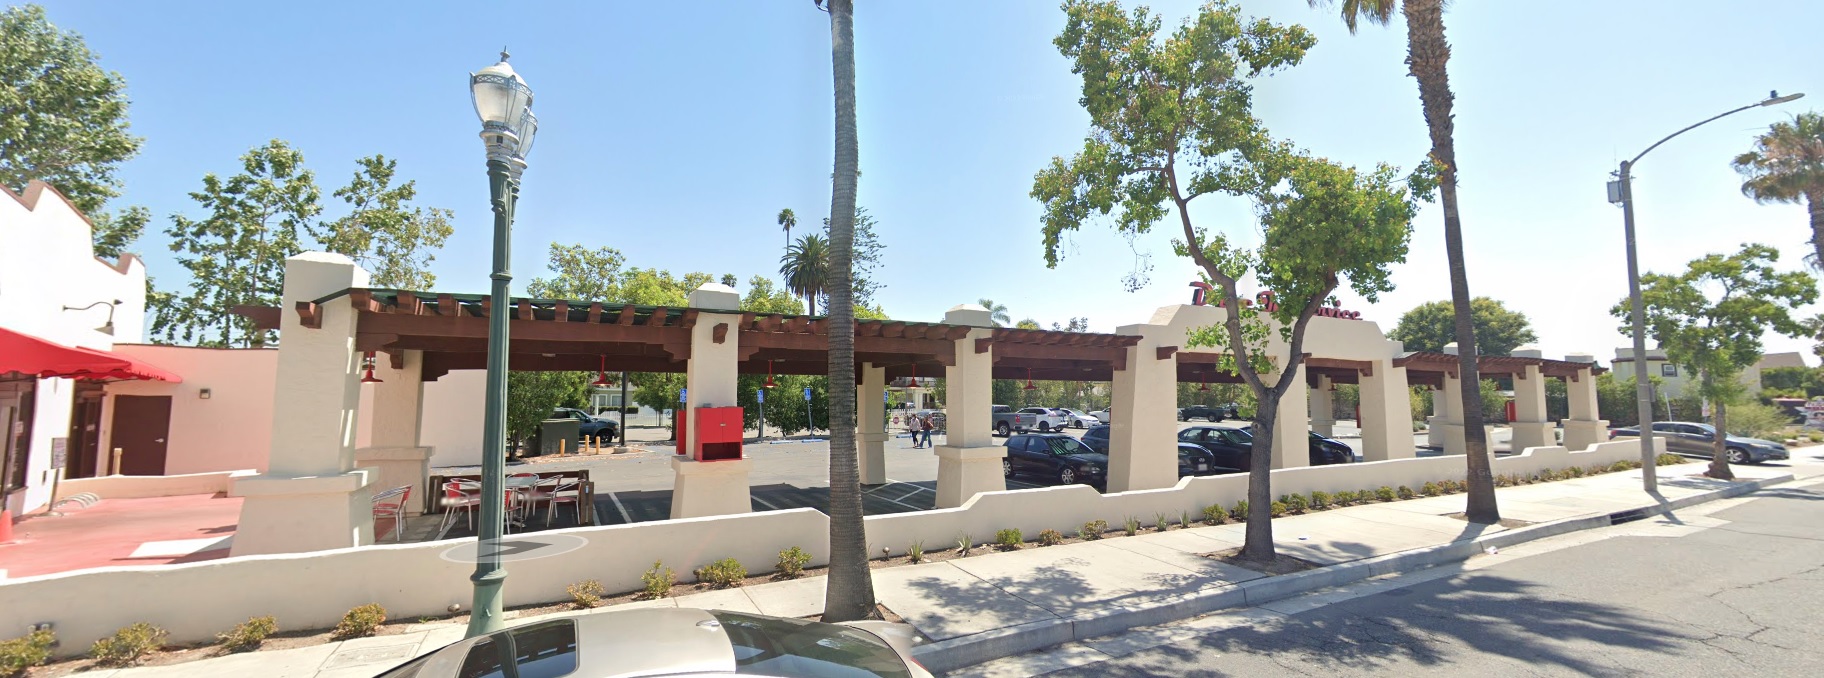 Tesla SC - Ruby's Diner, 1128 W Lincoln Ave, Anaheim, CA 92805 north entrance  b.jpg